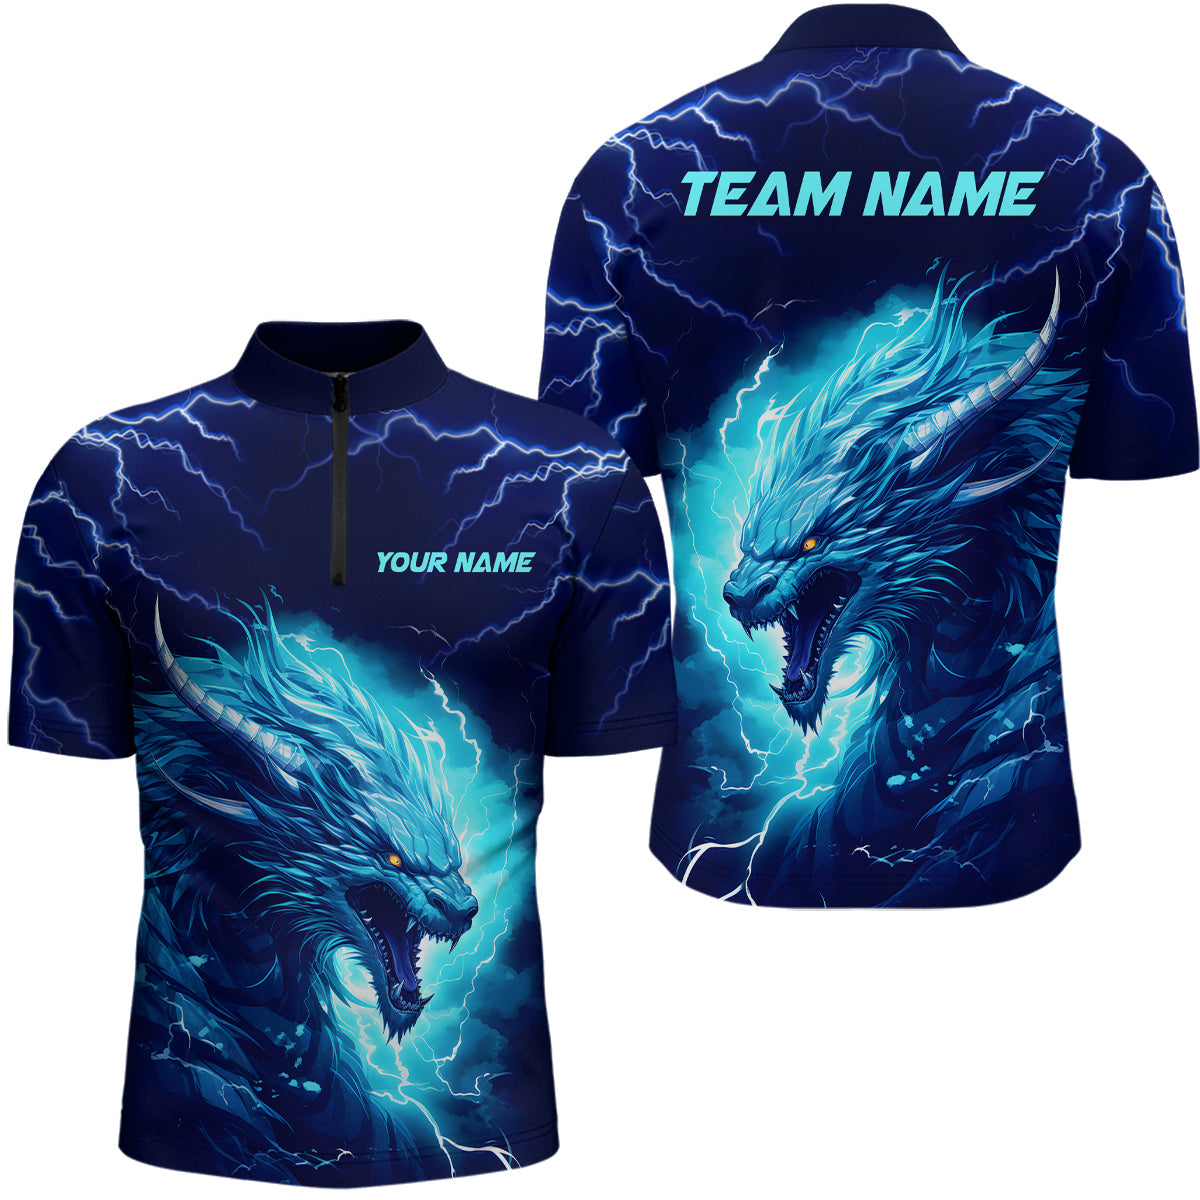 Bowling Customized Jersey Shirt Navy Blue Lightning Thunder Dragon Quarter Zip Bowling Shirt For Bowlers, Bowling Team